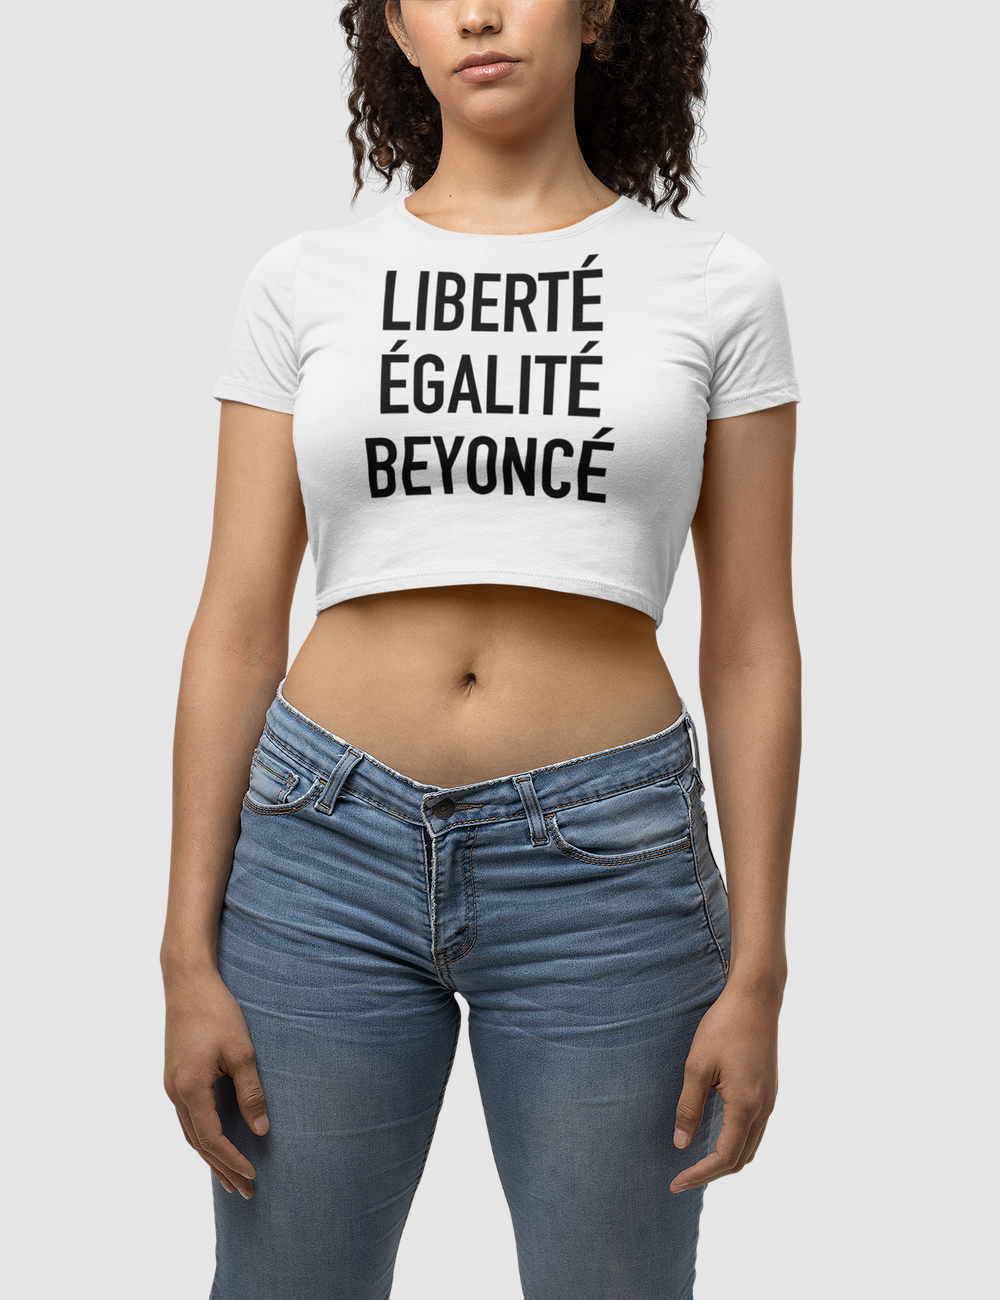 Liberté Égalité Beyoncé Women's Fitted White Crop Top T-Shirt - OniTakai